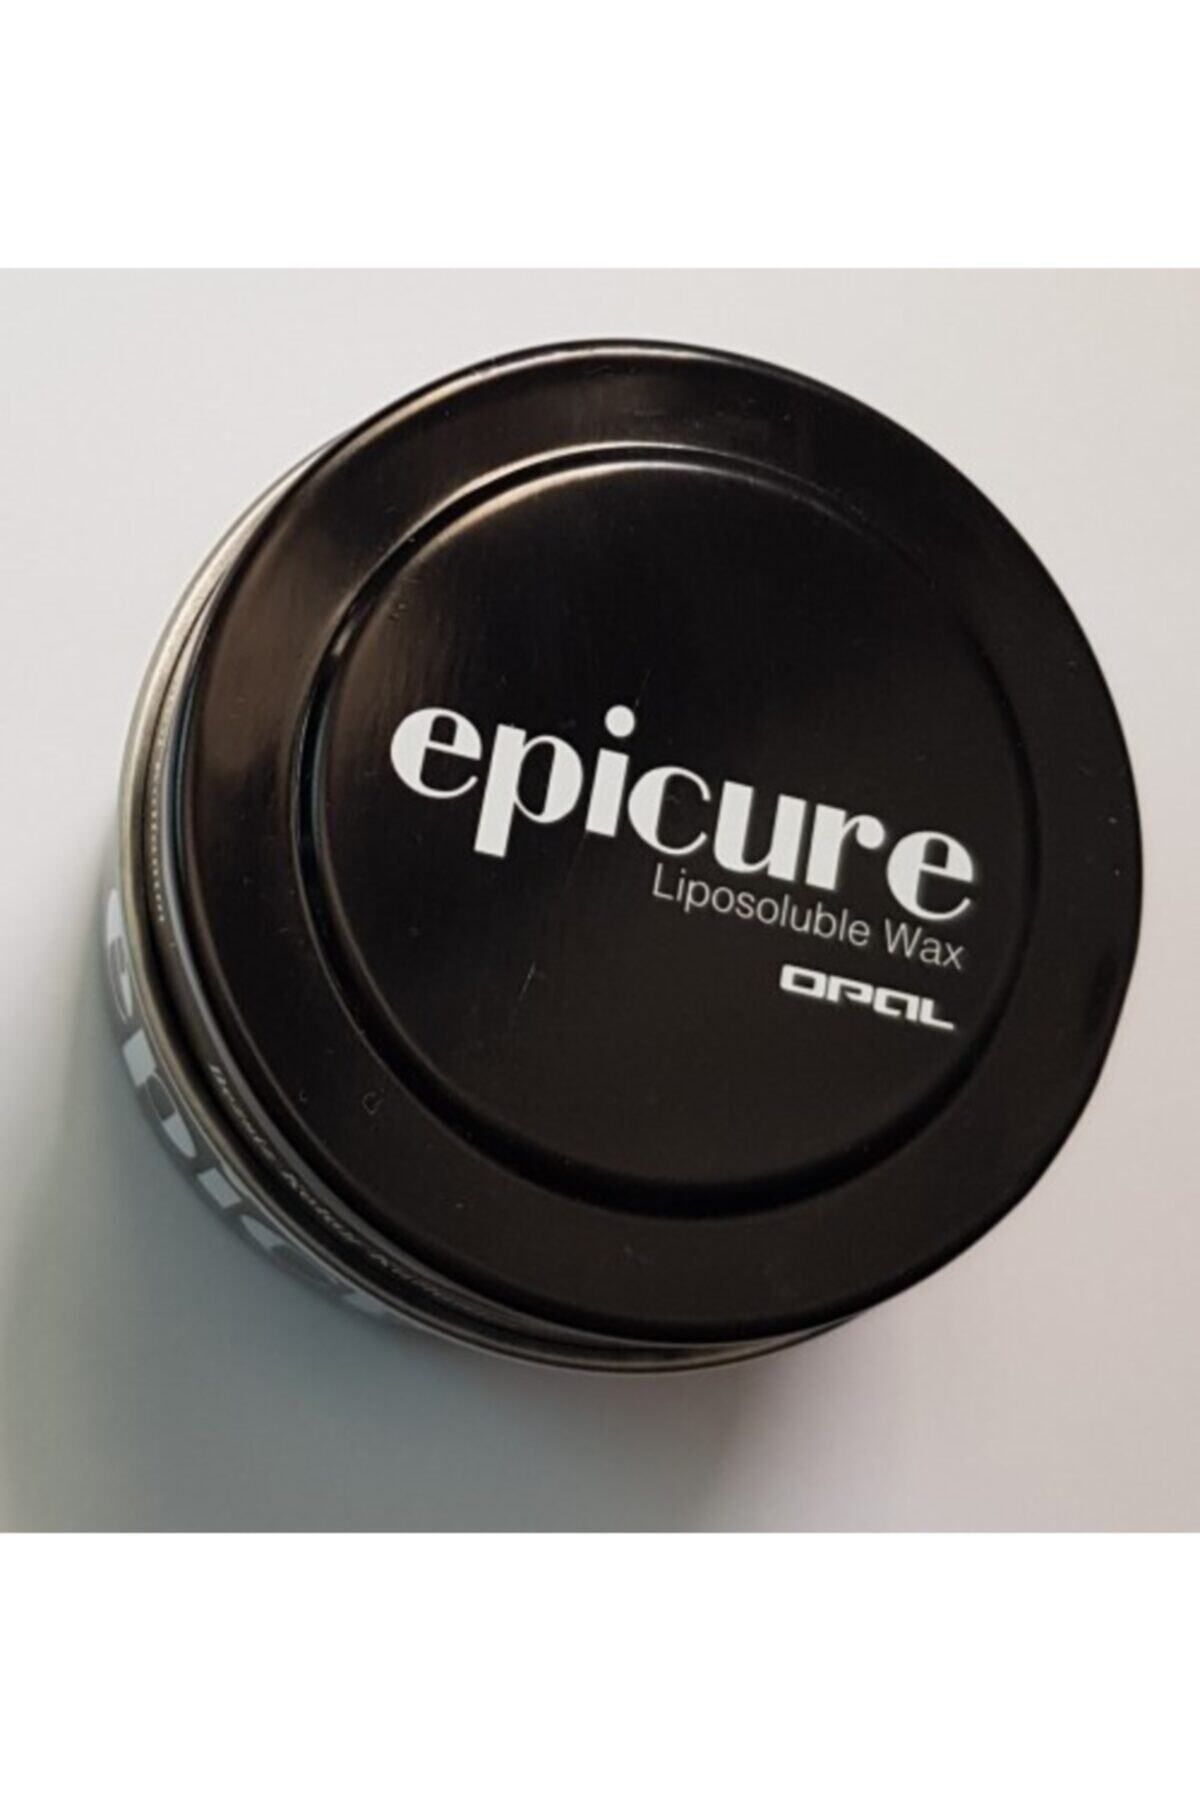 Epicure Liposoluble Wax Bezsiz Sir Ağda 280gr - Siyah